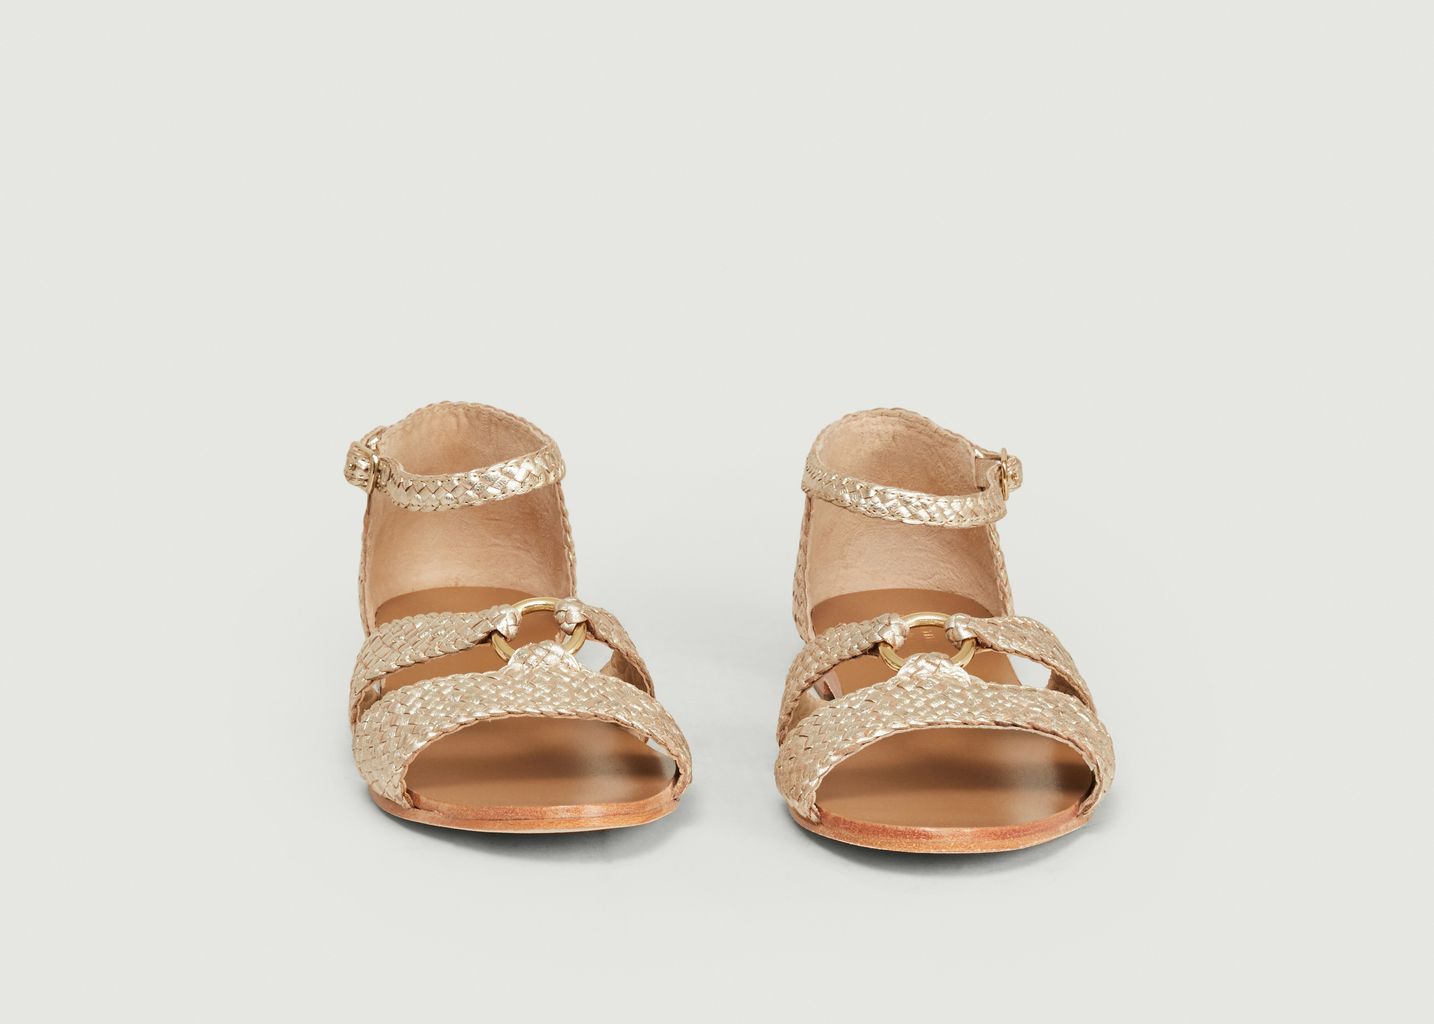 Manuel flat sandals - Petite Mendigote